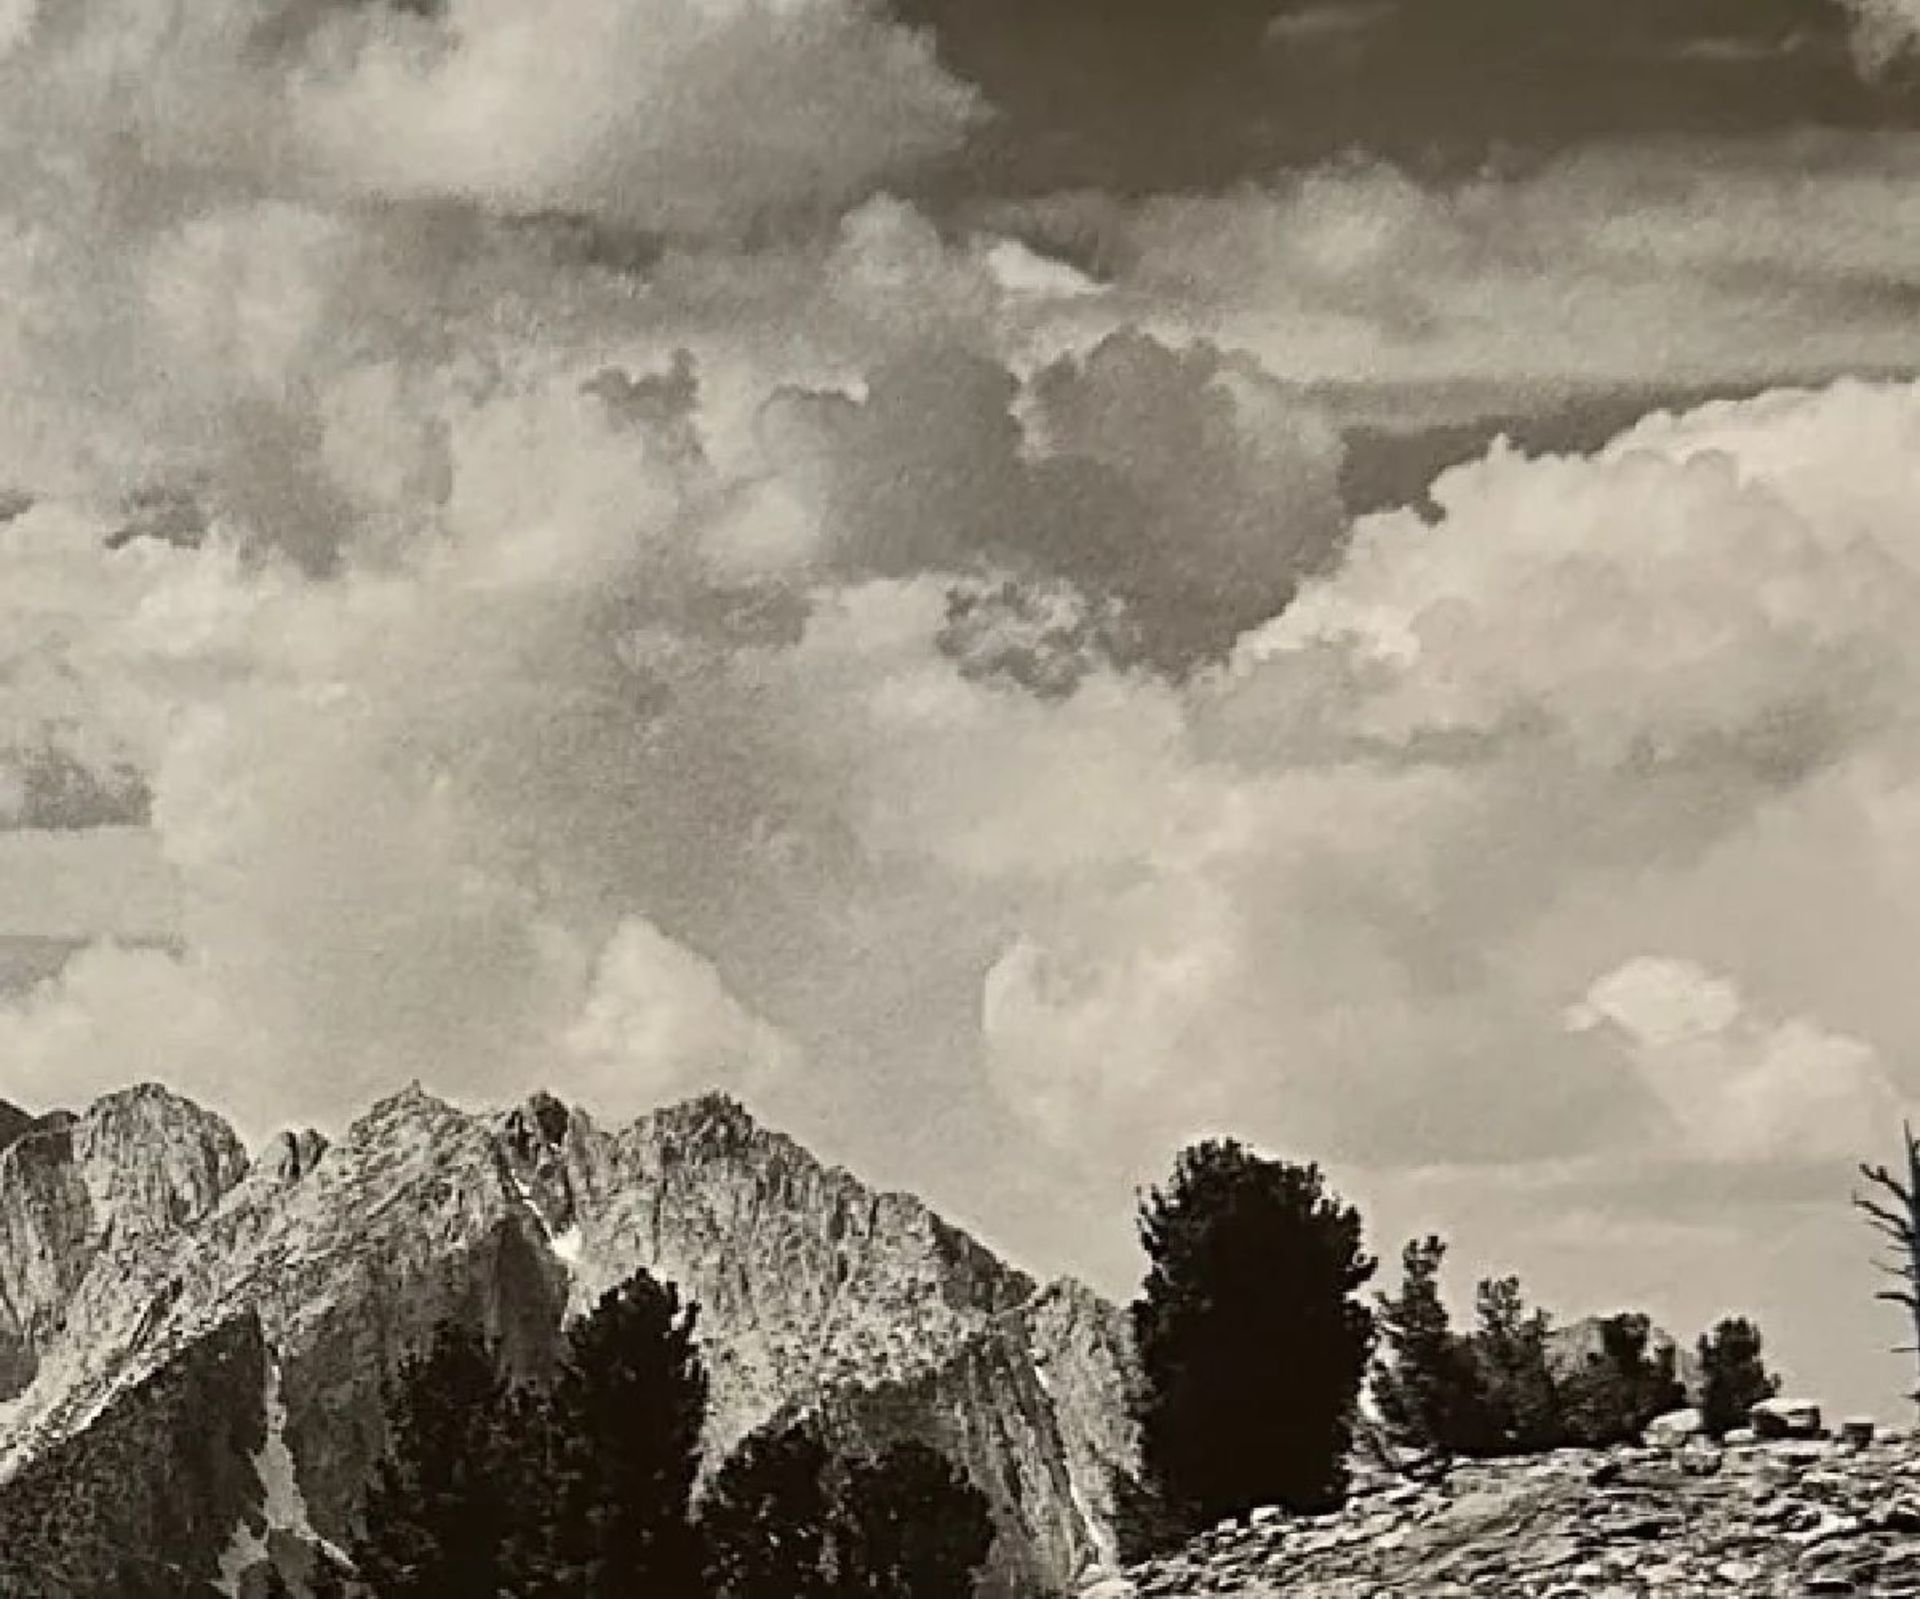 Ansel Adams "Mount Clarence King" Print - Image 4 of 6